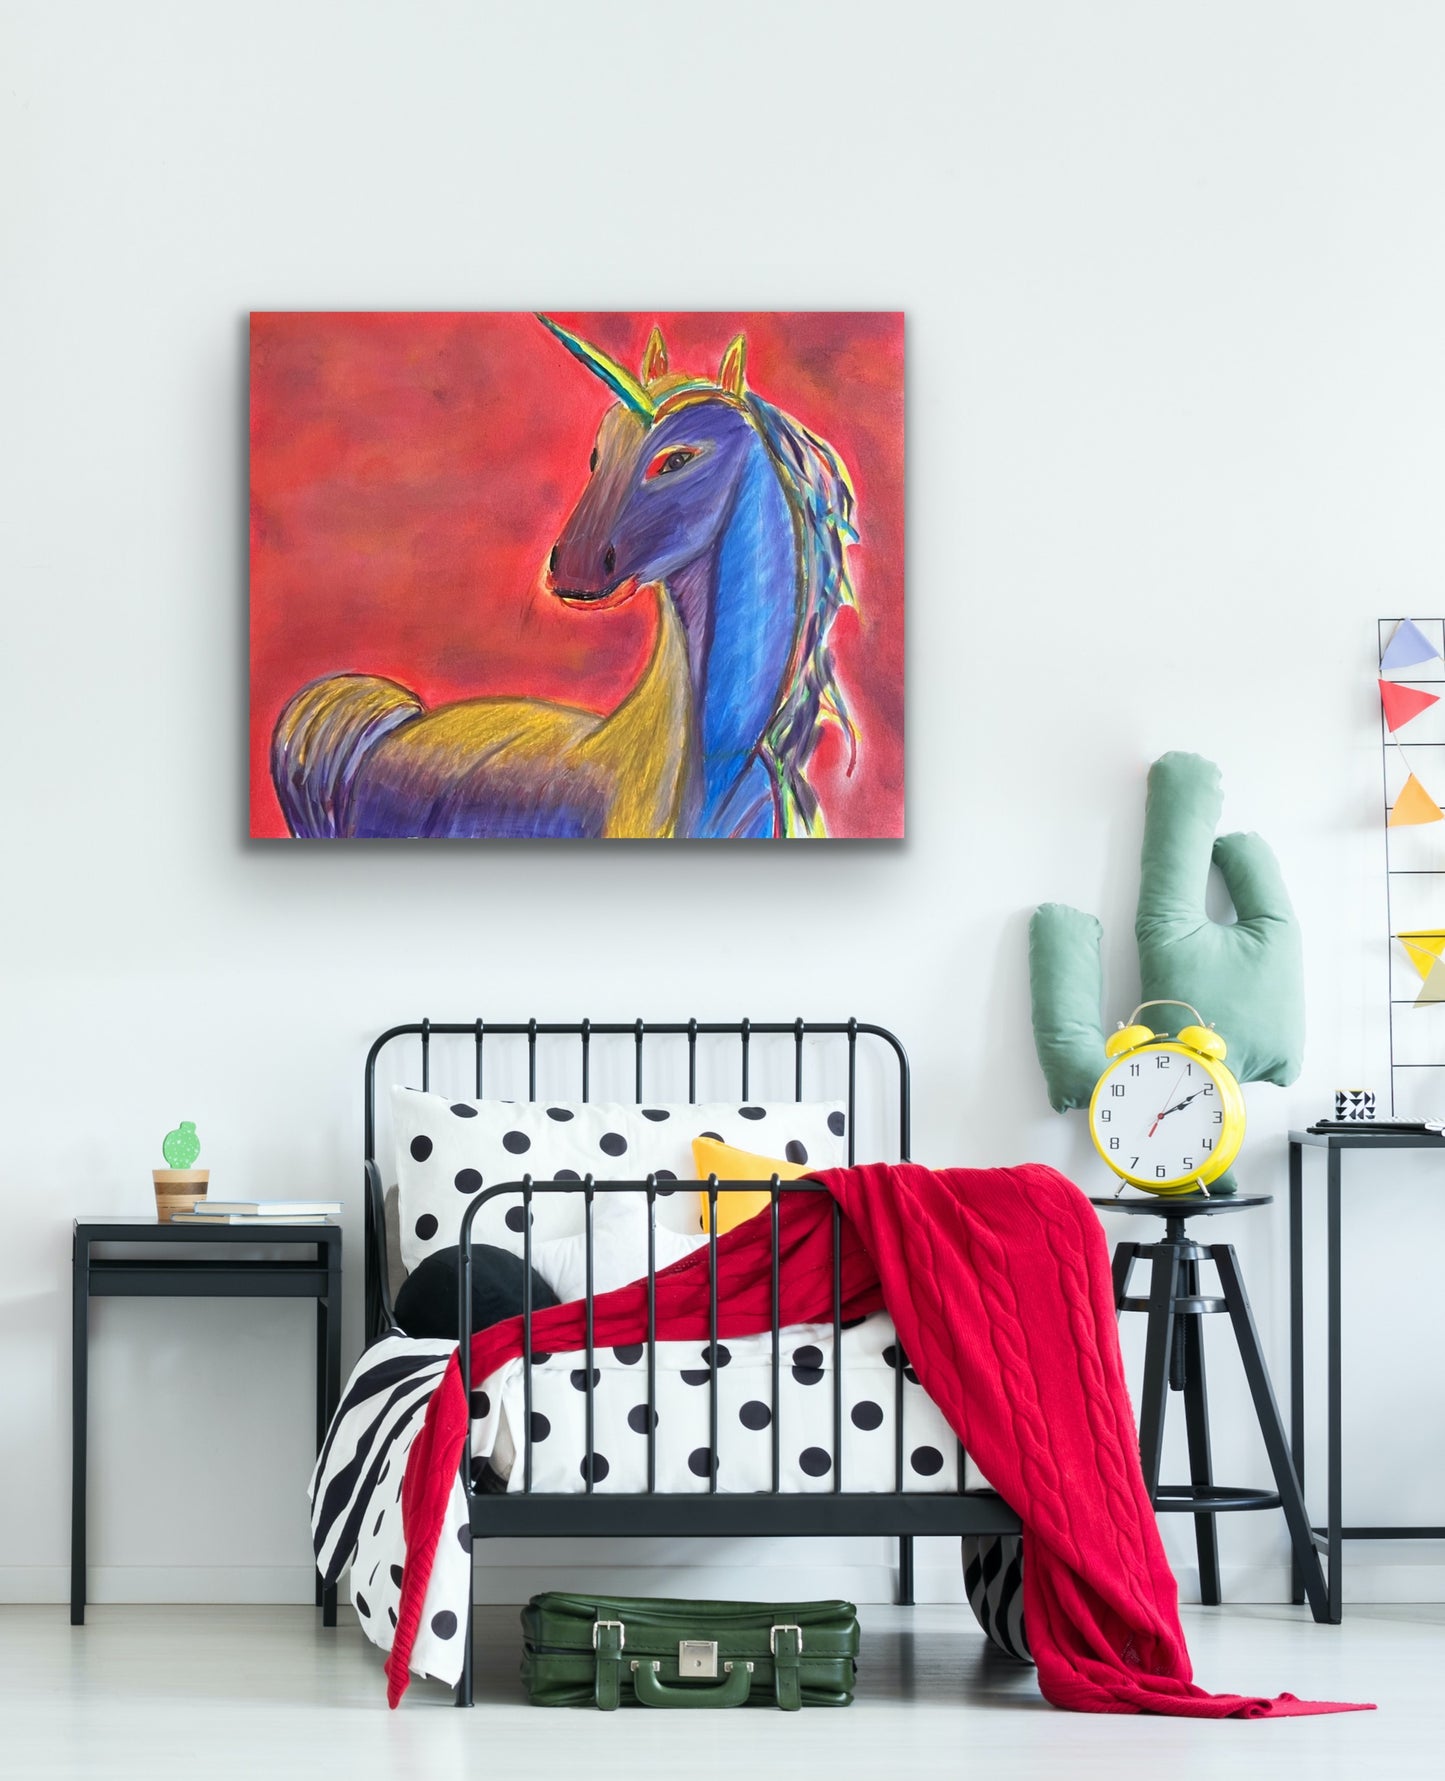 Magical Unicorn   - fine prints of original artwork